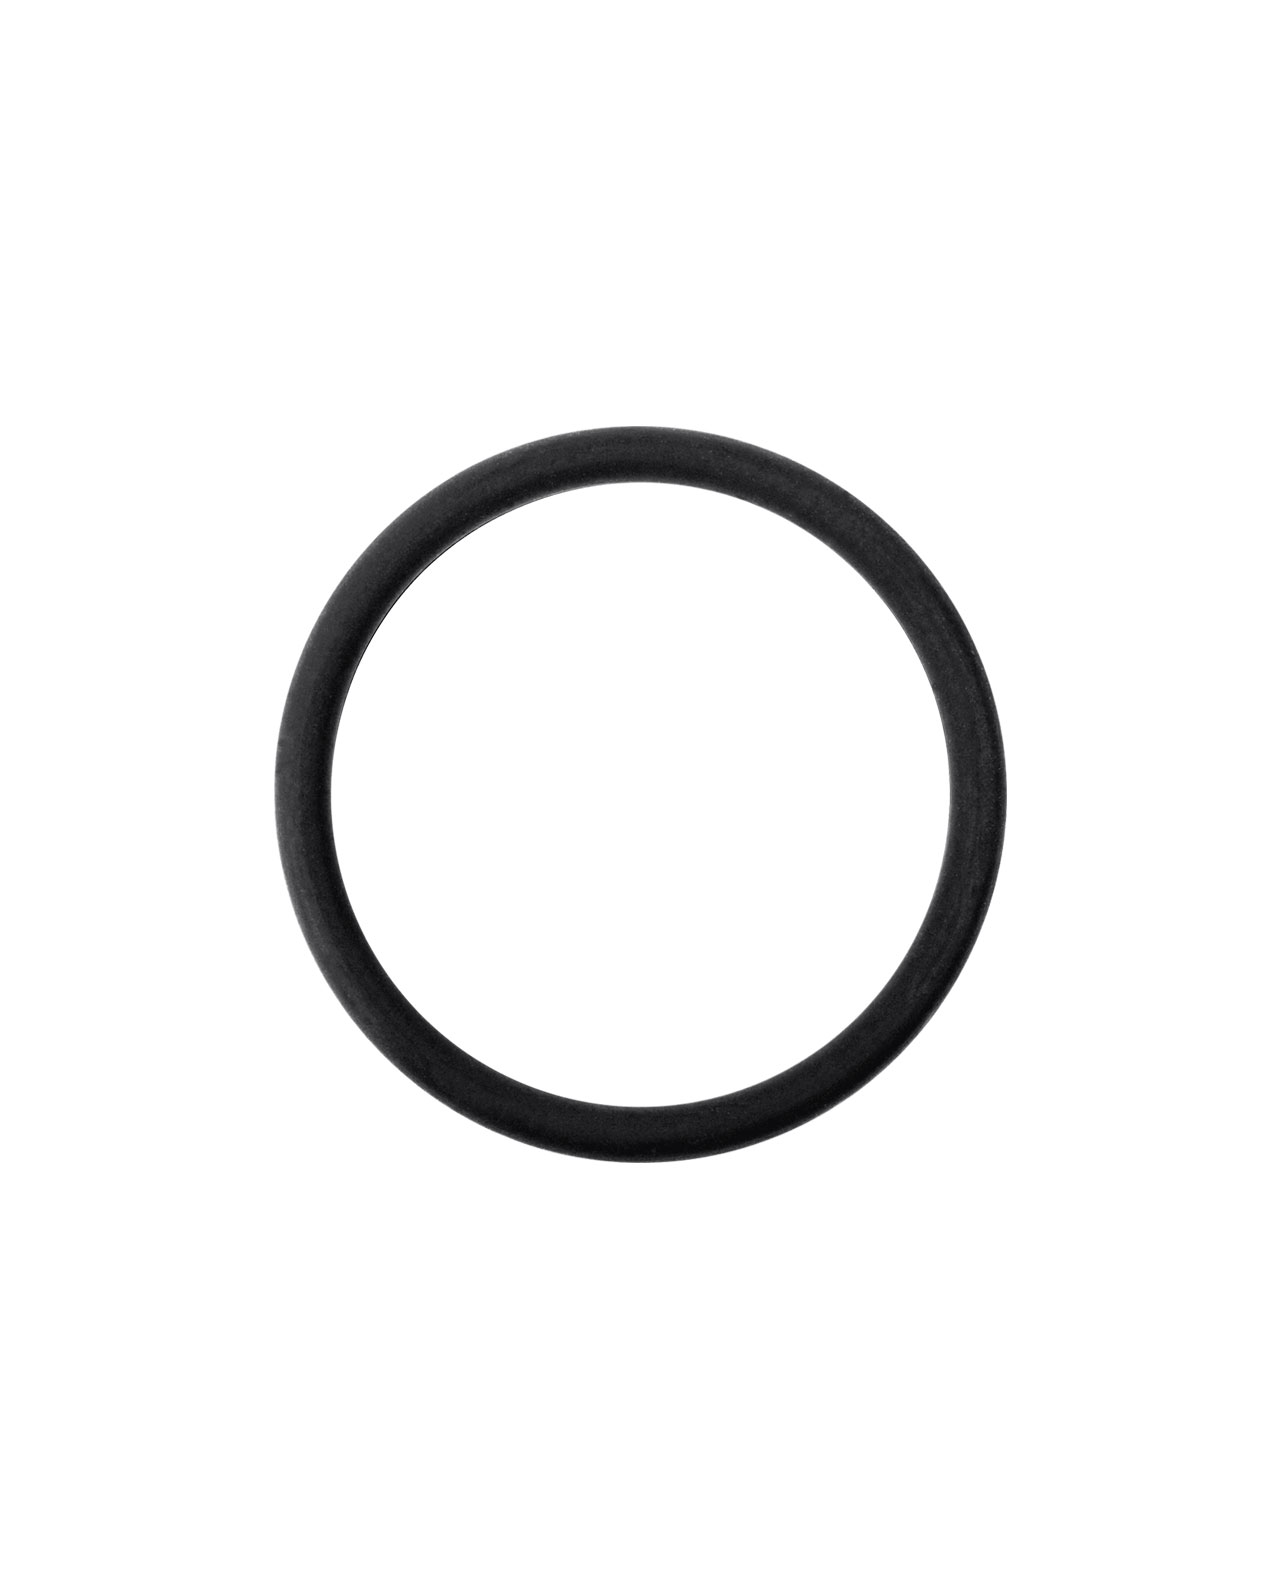 Sleeve O-Ring (J024)